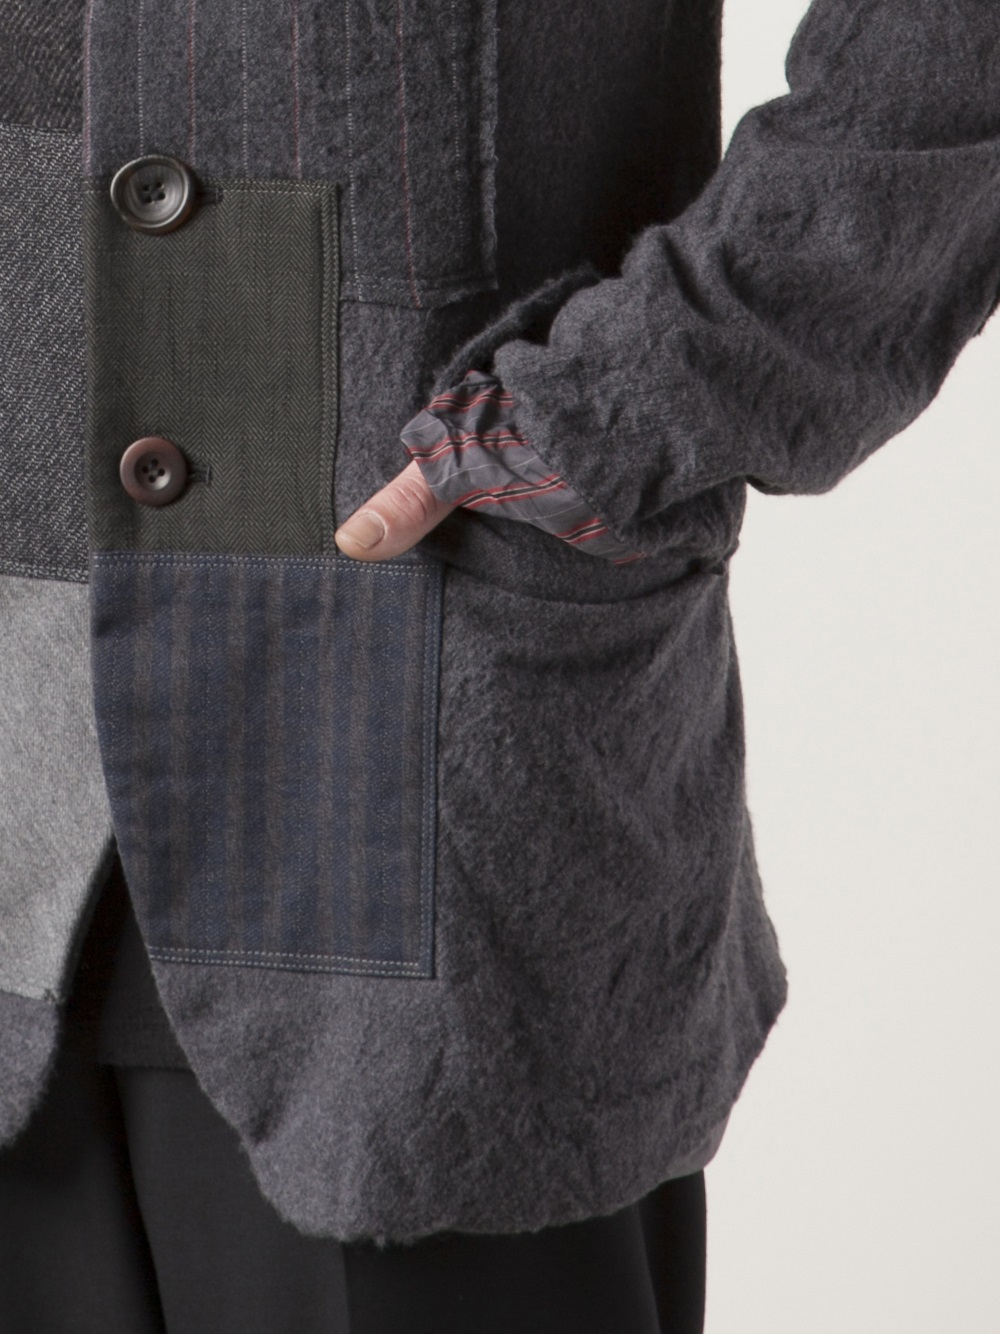 Junya Watanabe Patch Jacket in Grey (Gray) for Men - Lyst